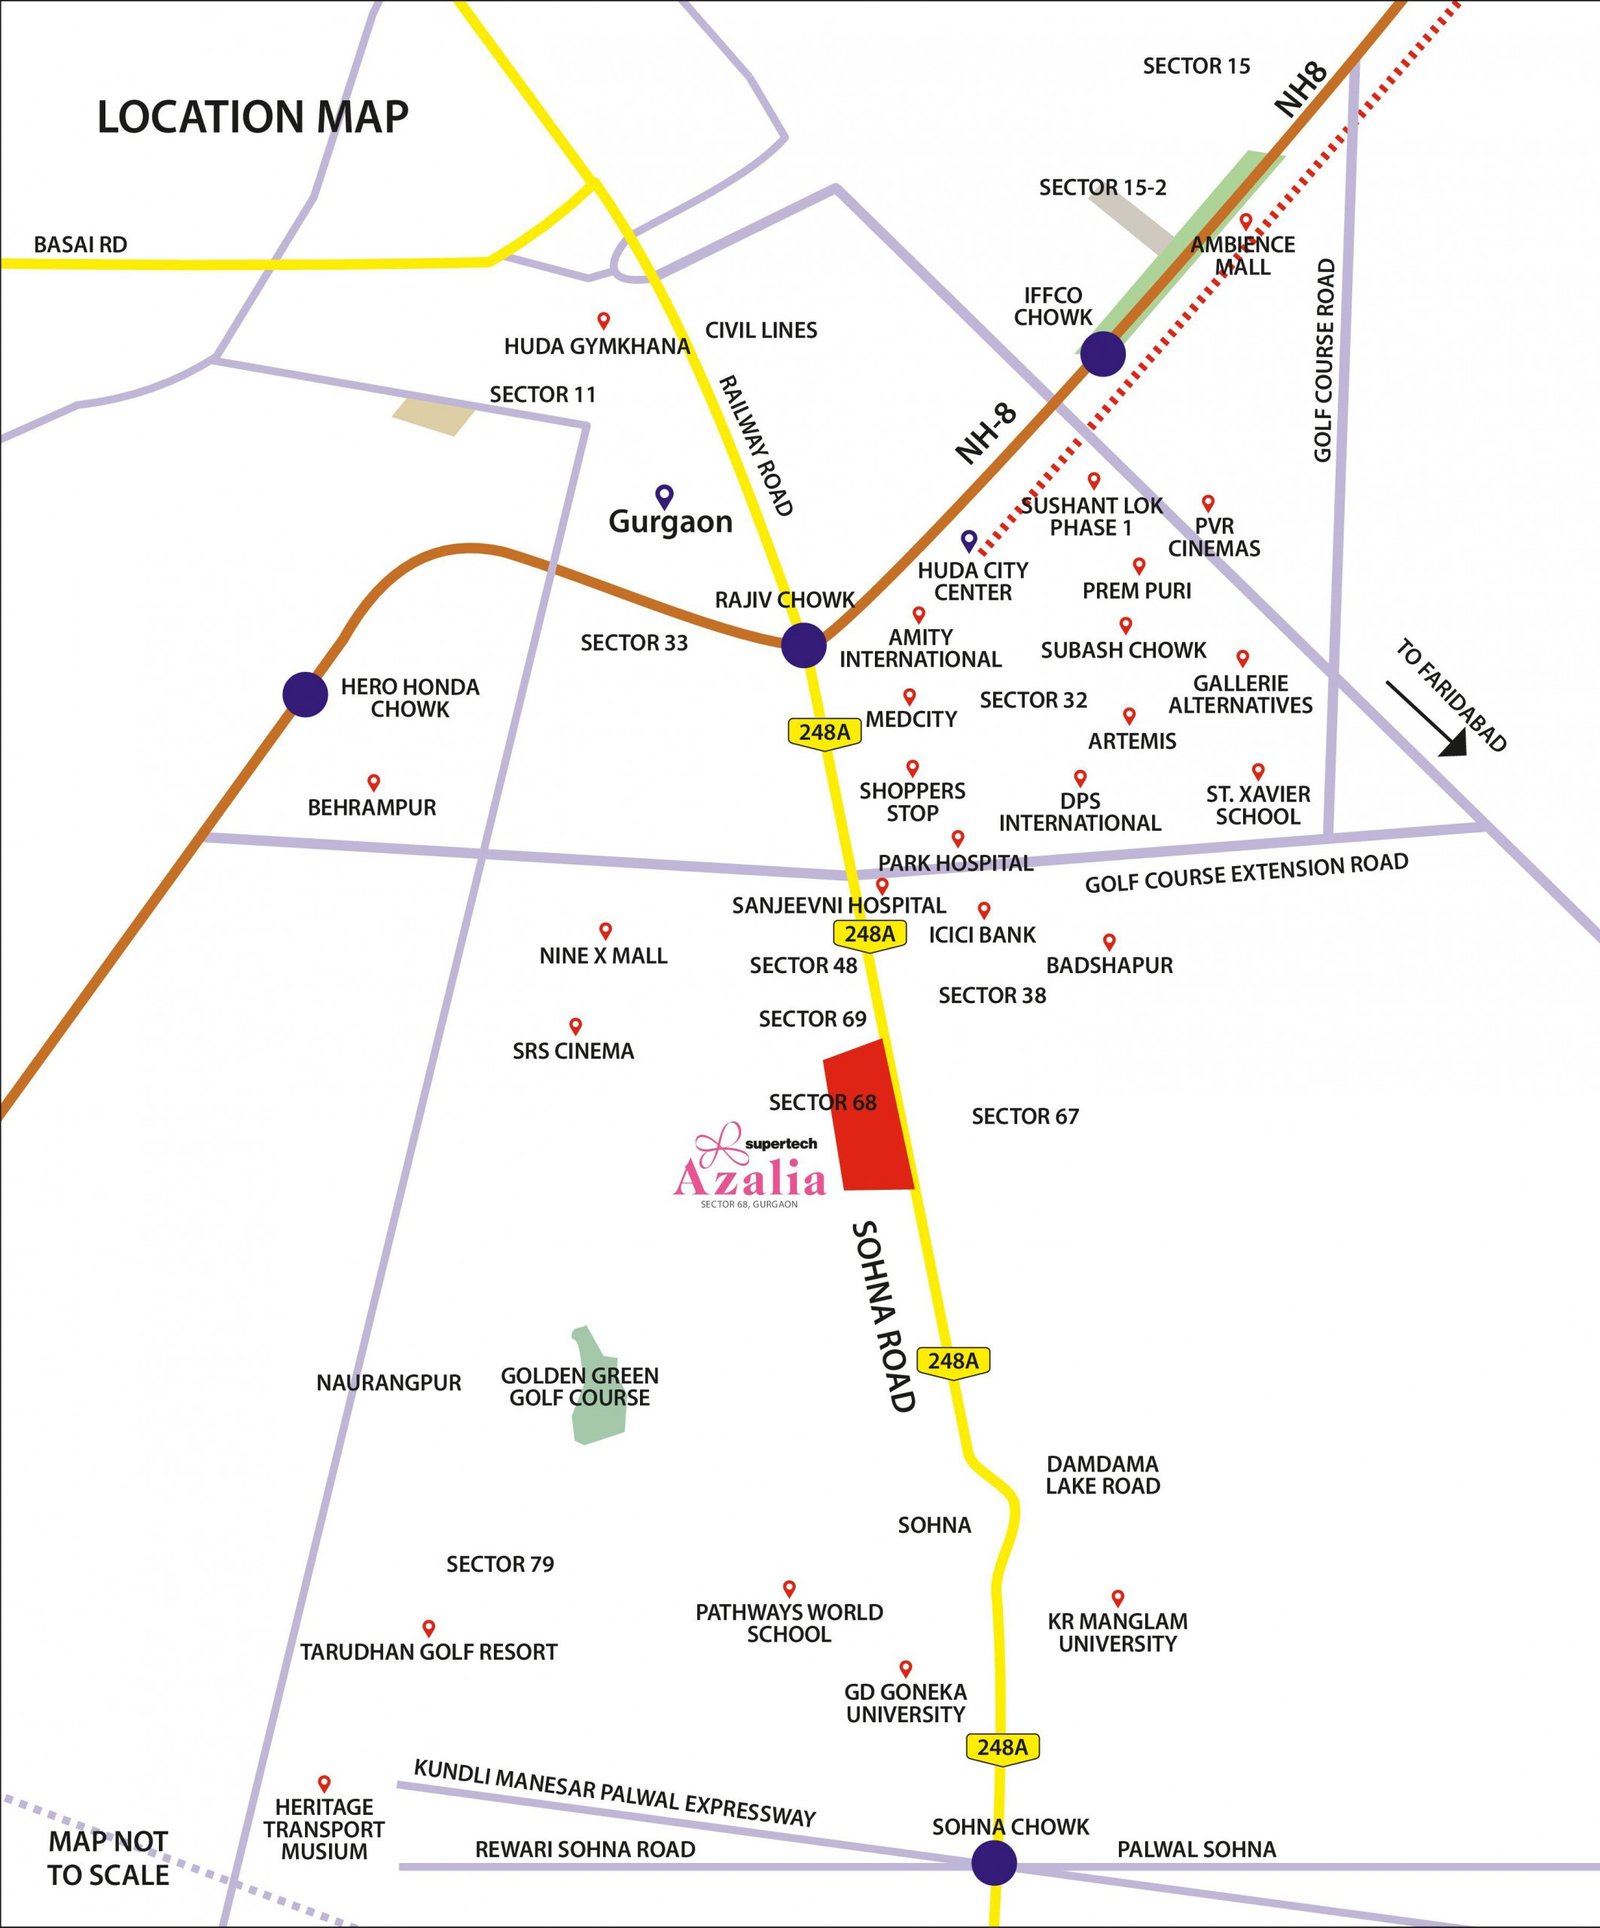 Supertech Azalia Location Map